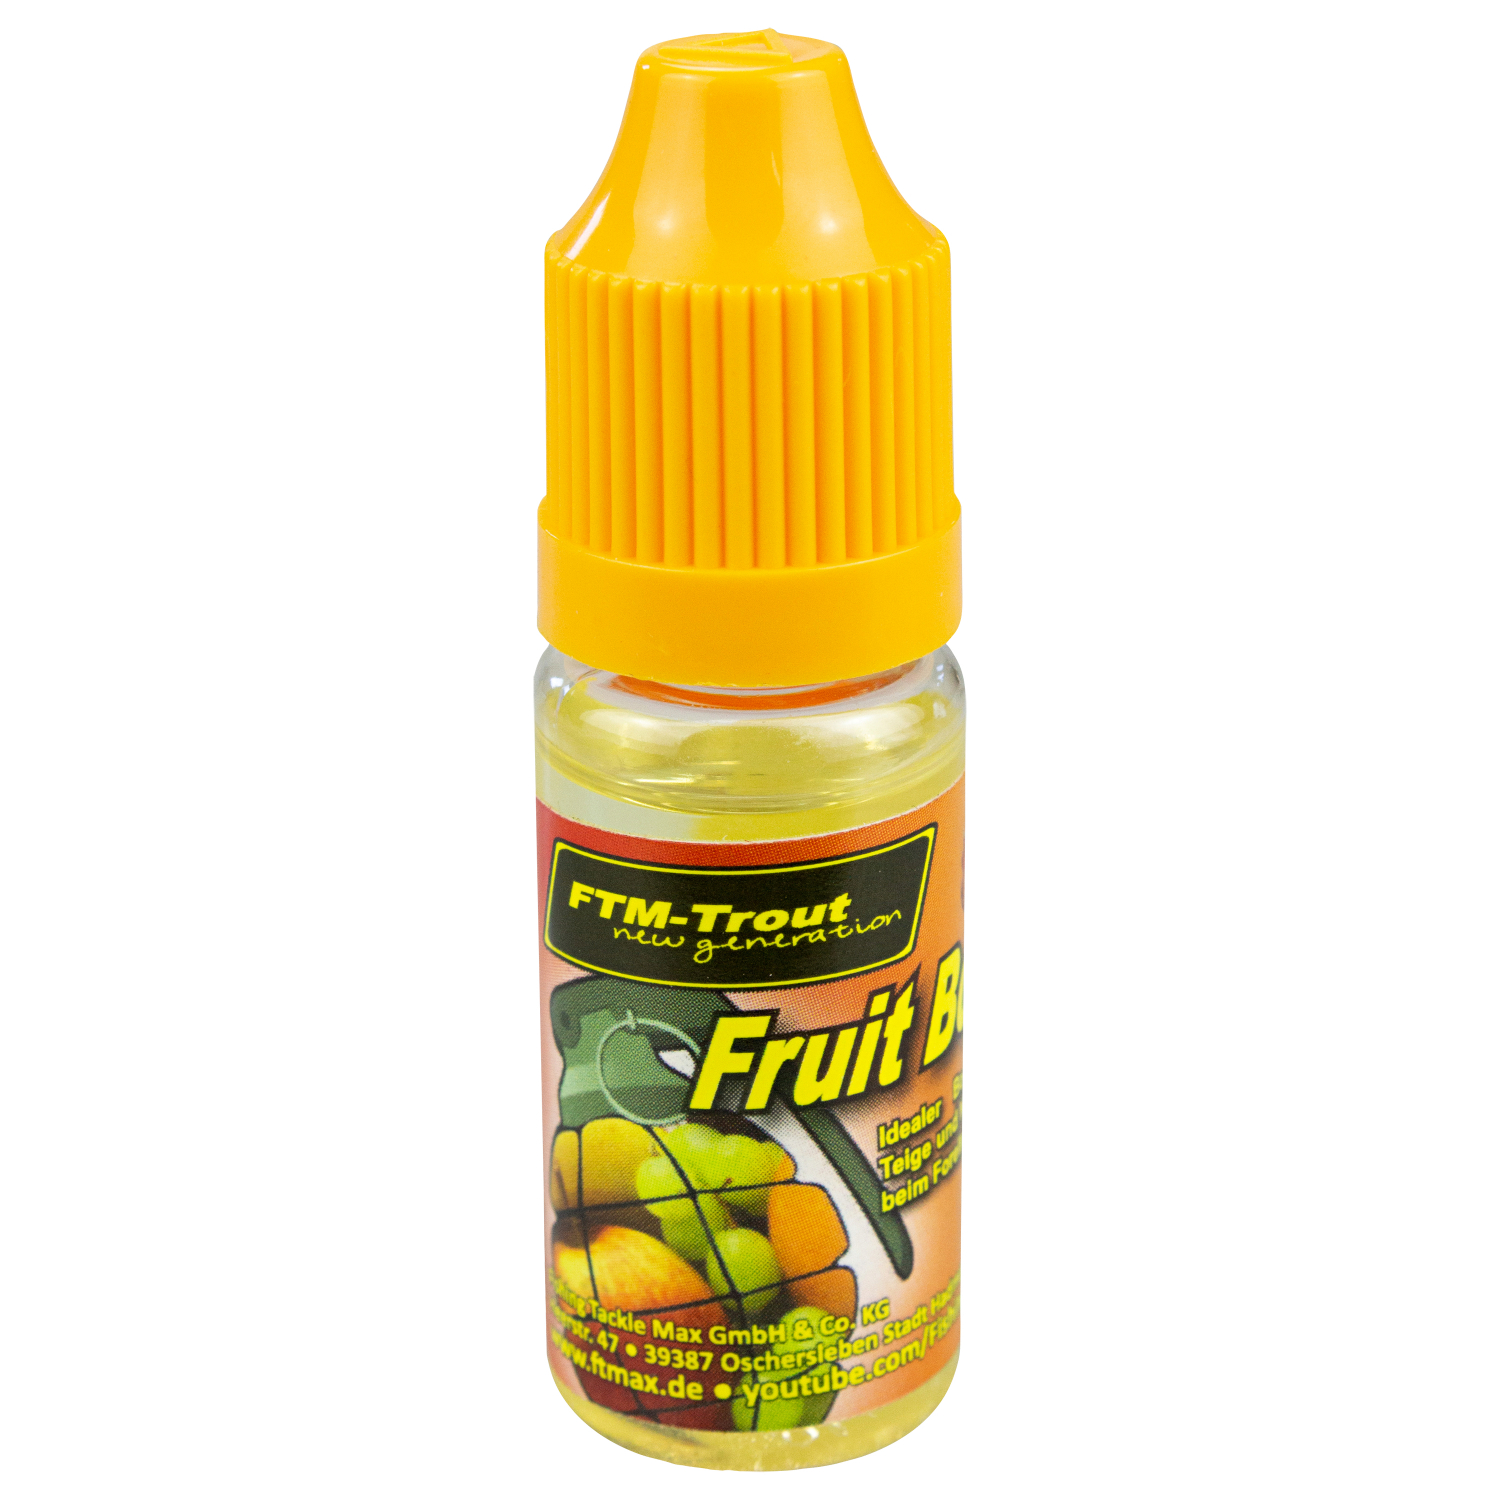 FTM Forellen Booster-Öl (Fruit Bomb) 